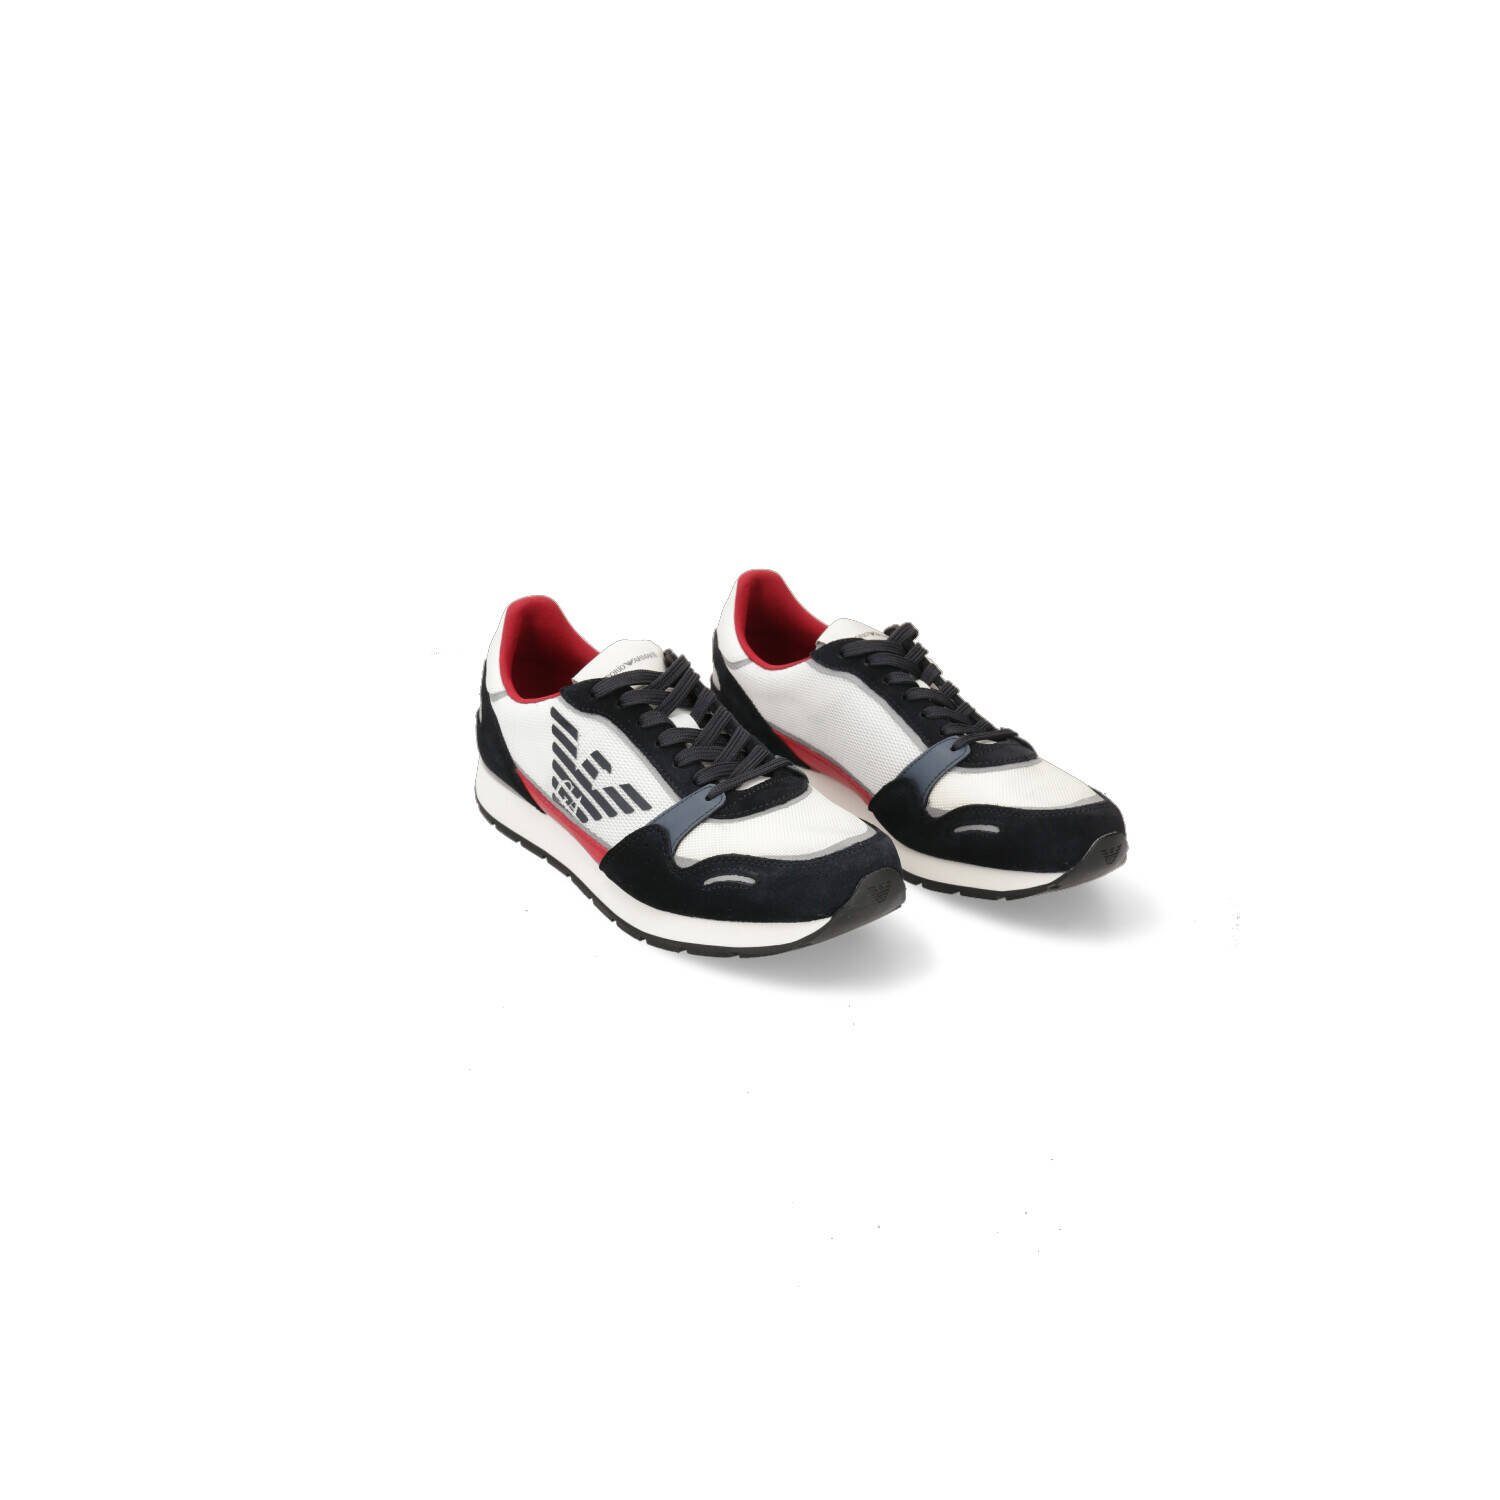 Emporio Armani Emporio Herren Sneaker Sneaker Sneakers, Emporio Armani X4X537 XM678 Armani